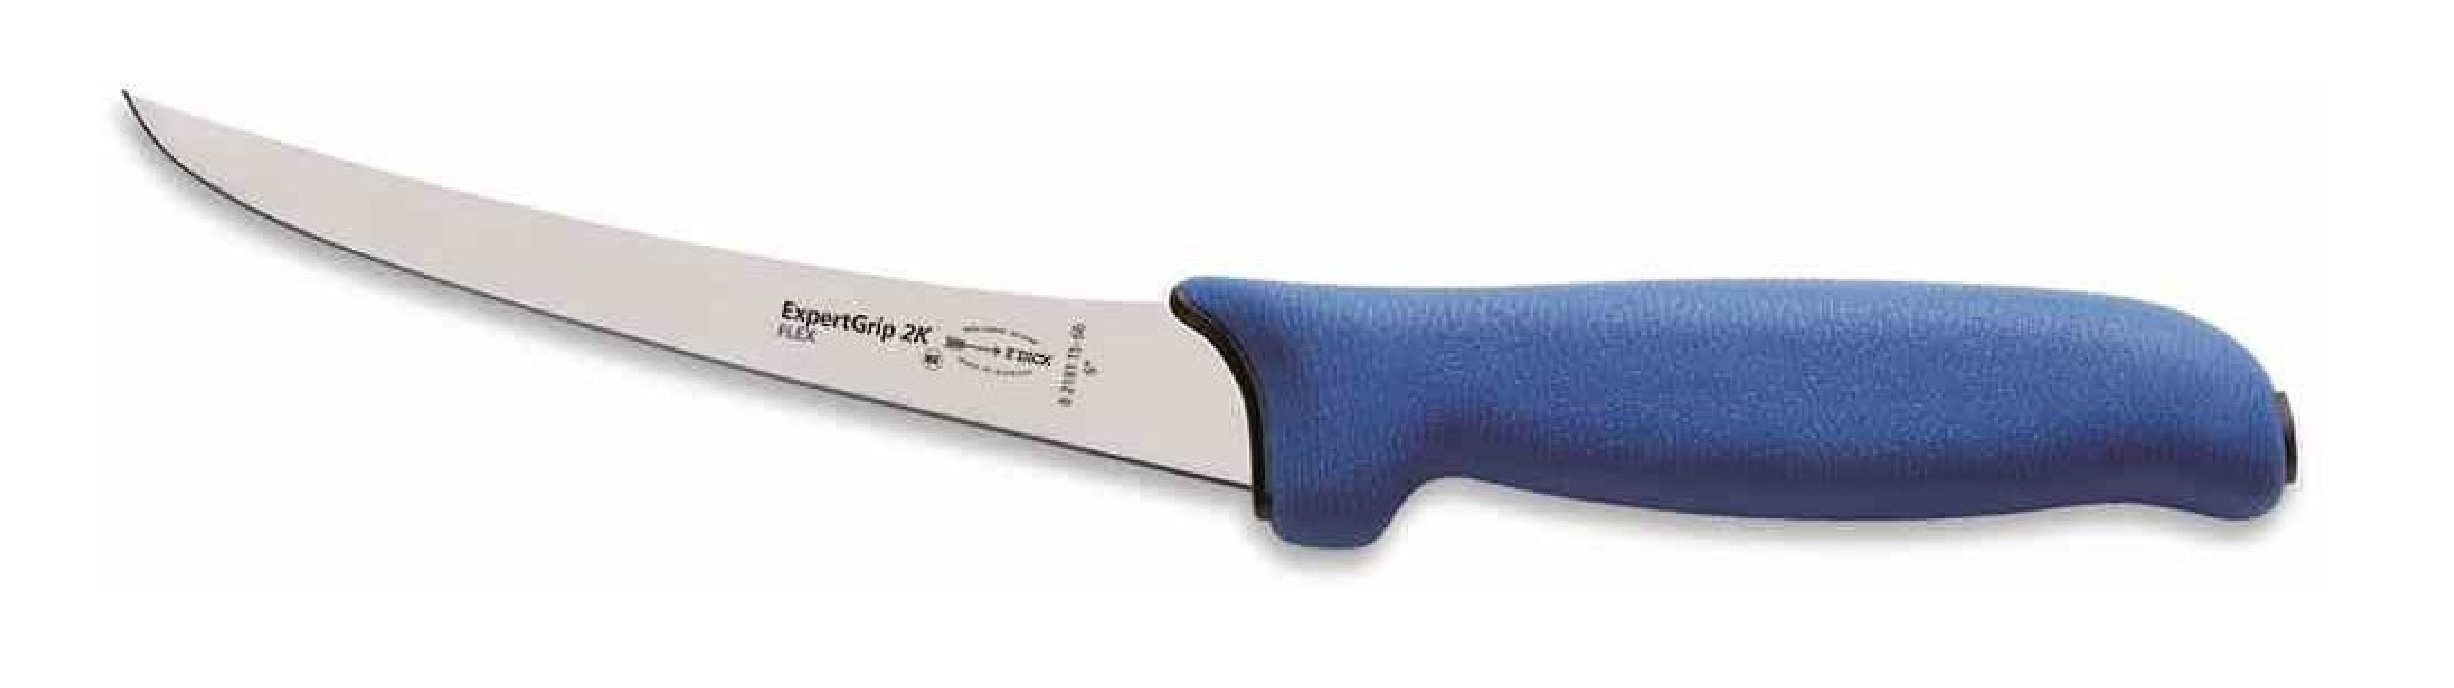 Dick Ausbeinmesser Dick Ausbeinmesser 8218113 Expert Grip 2K Messer Klinge 13 cm blau | Ausbeinmesser